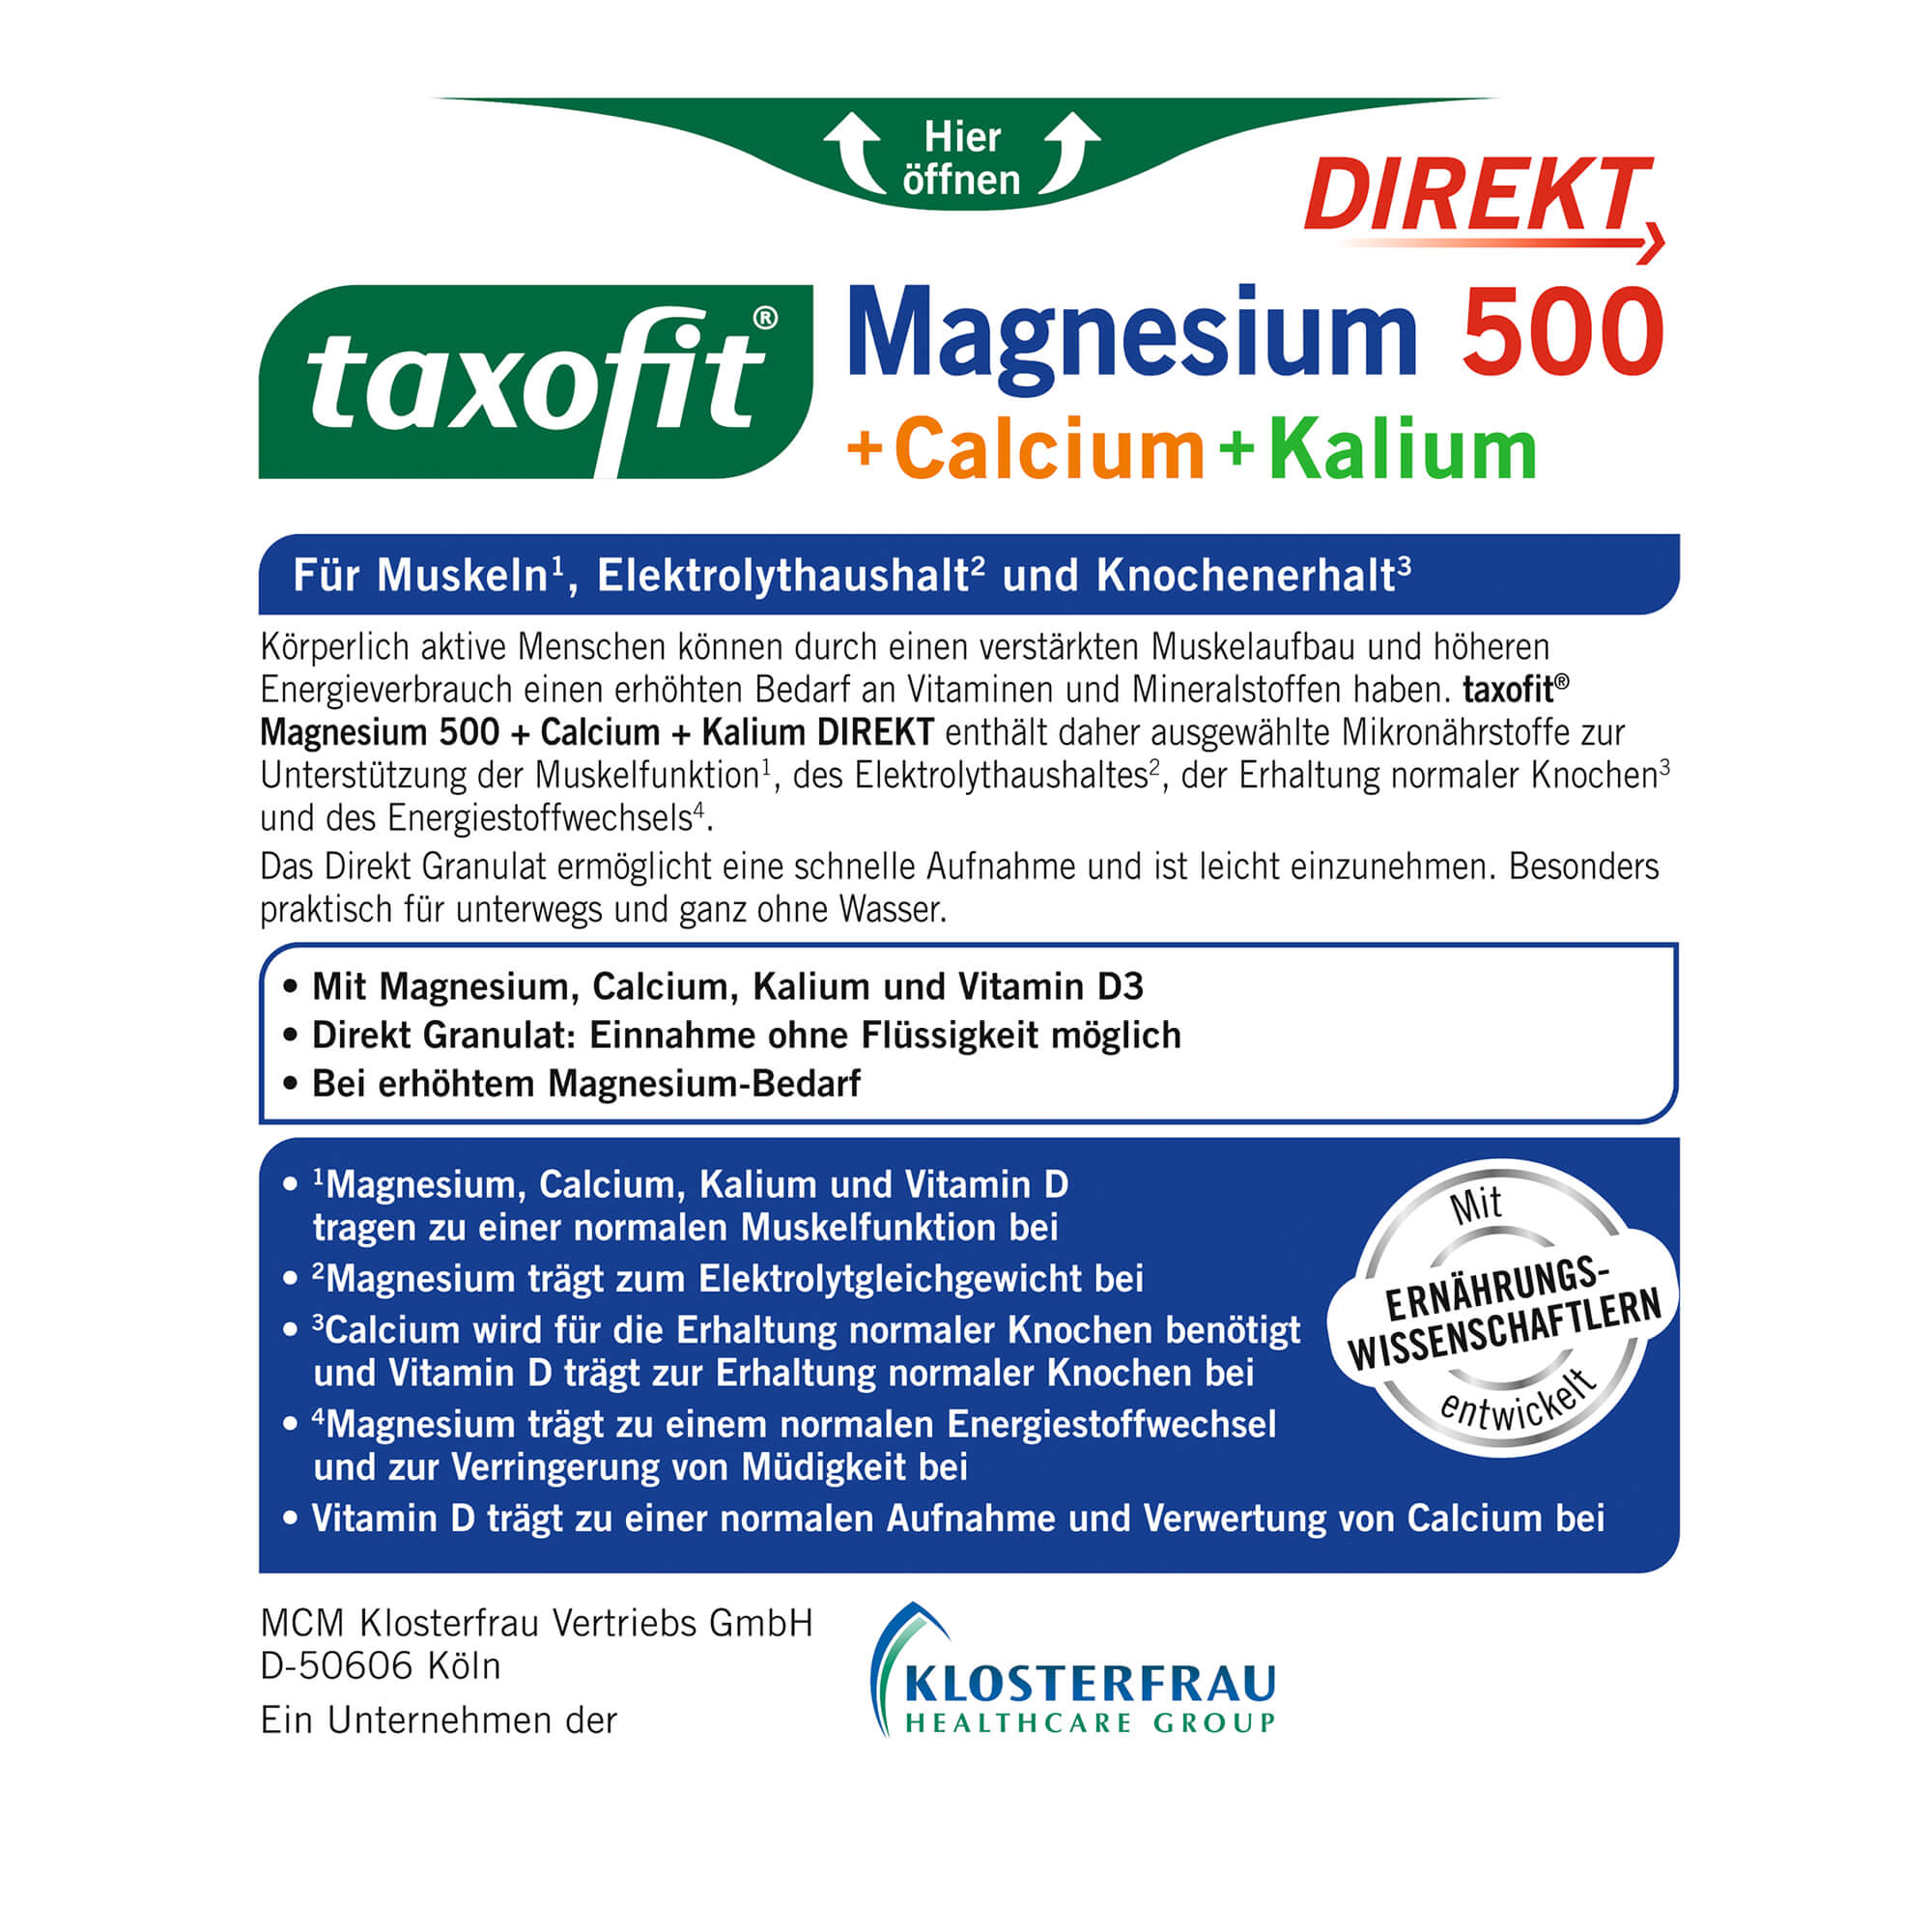 Taxofit Magnesium 500+Calcium+Kalium Direkt-Granulat Packungsrückseite